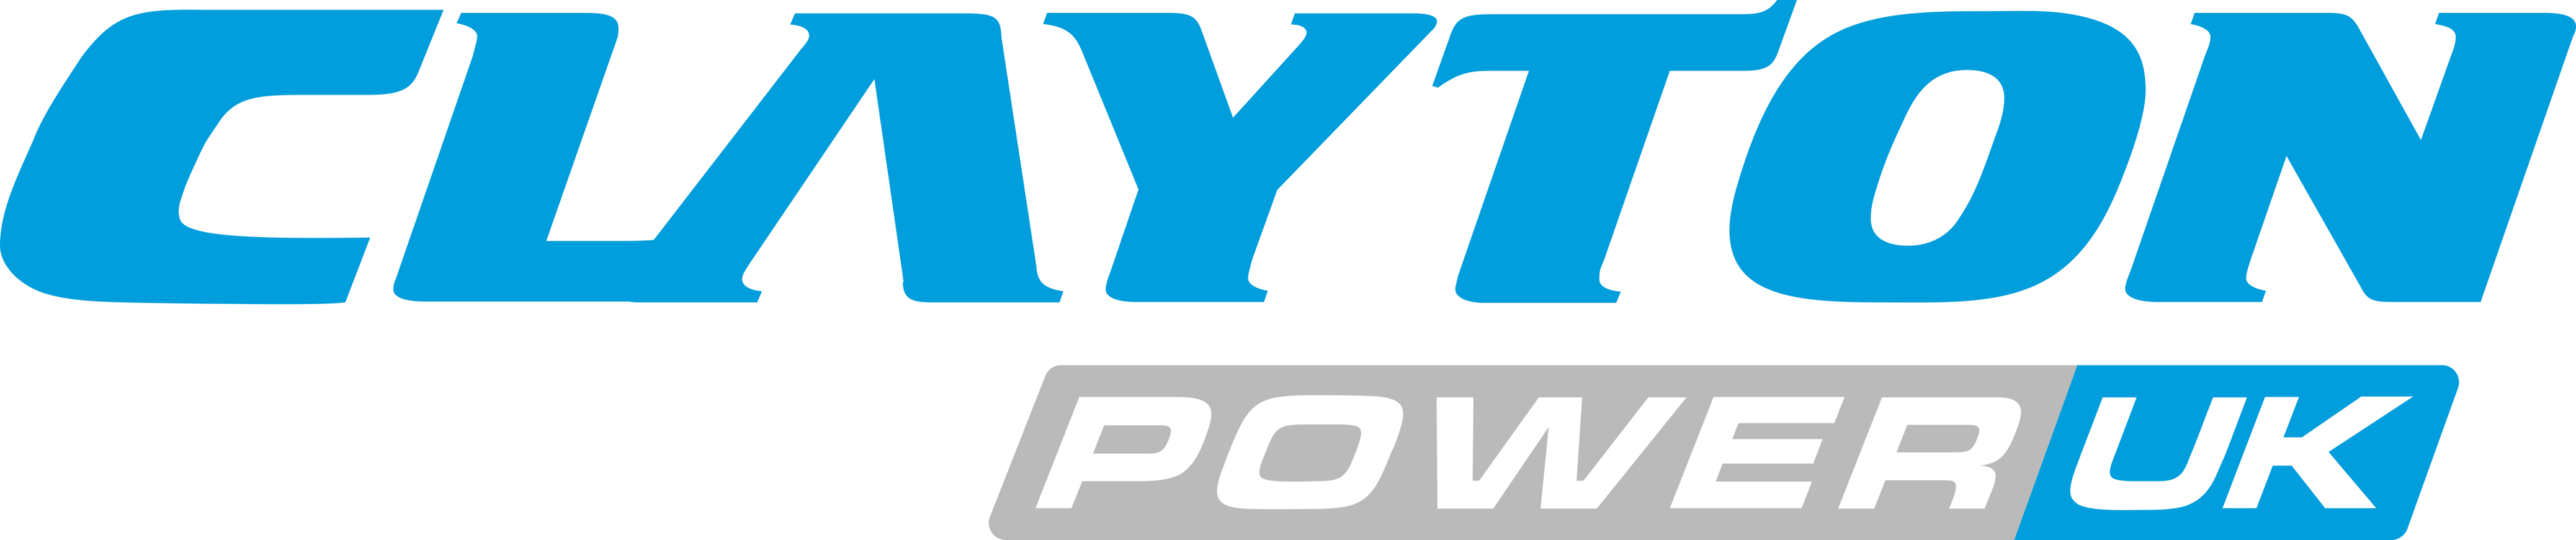 Clayton Power Logo